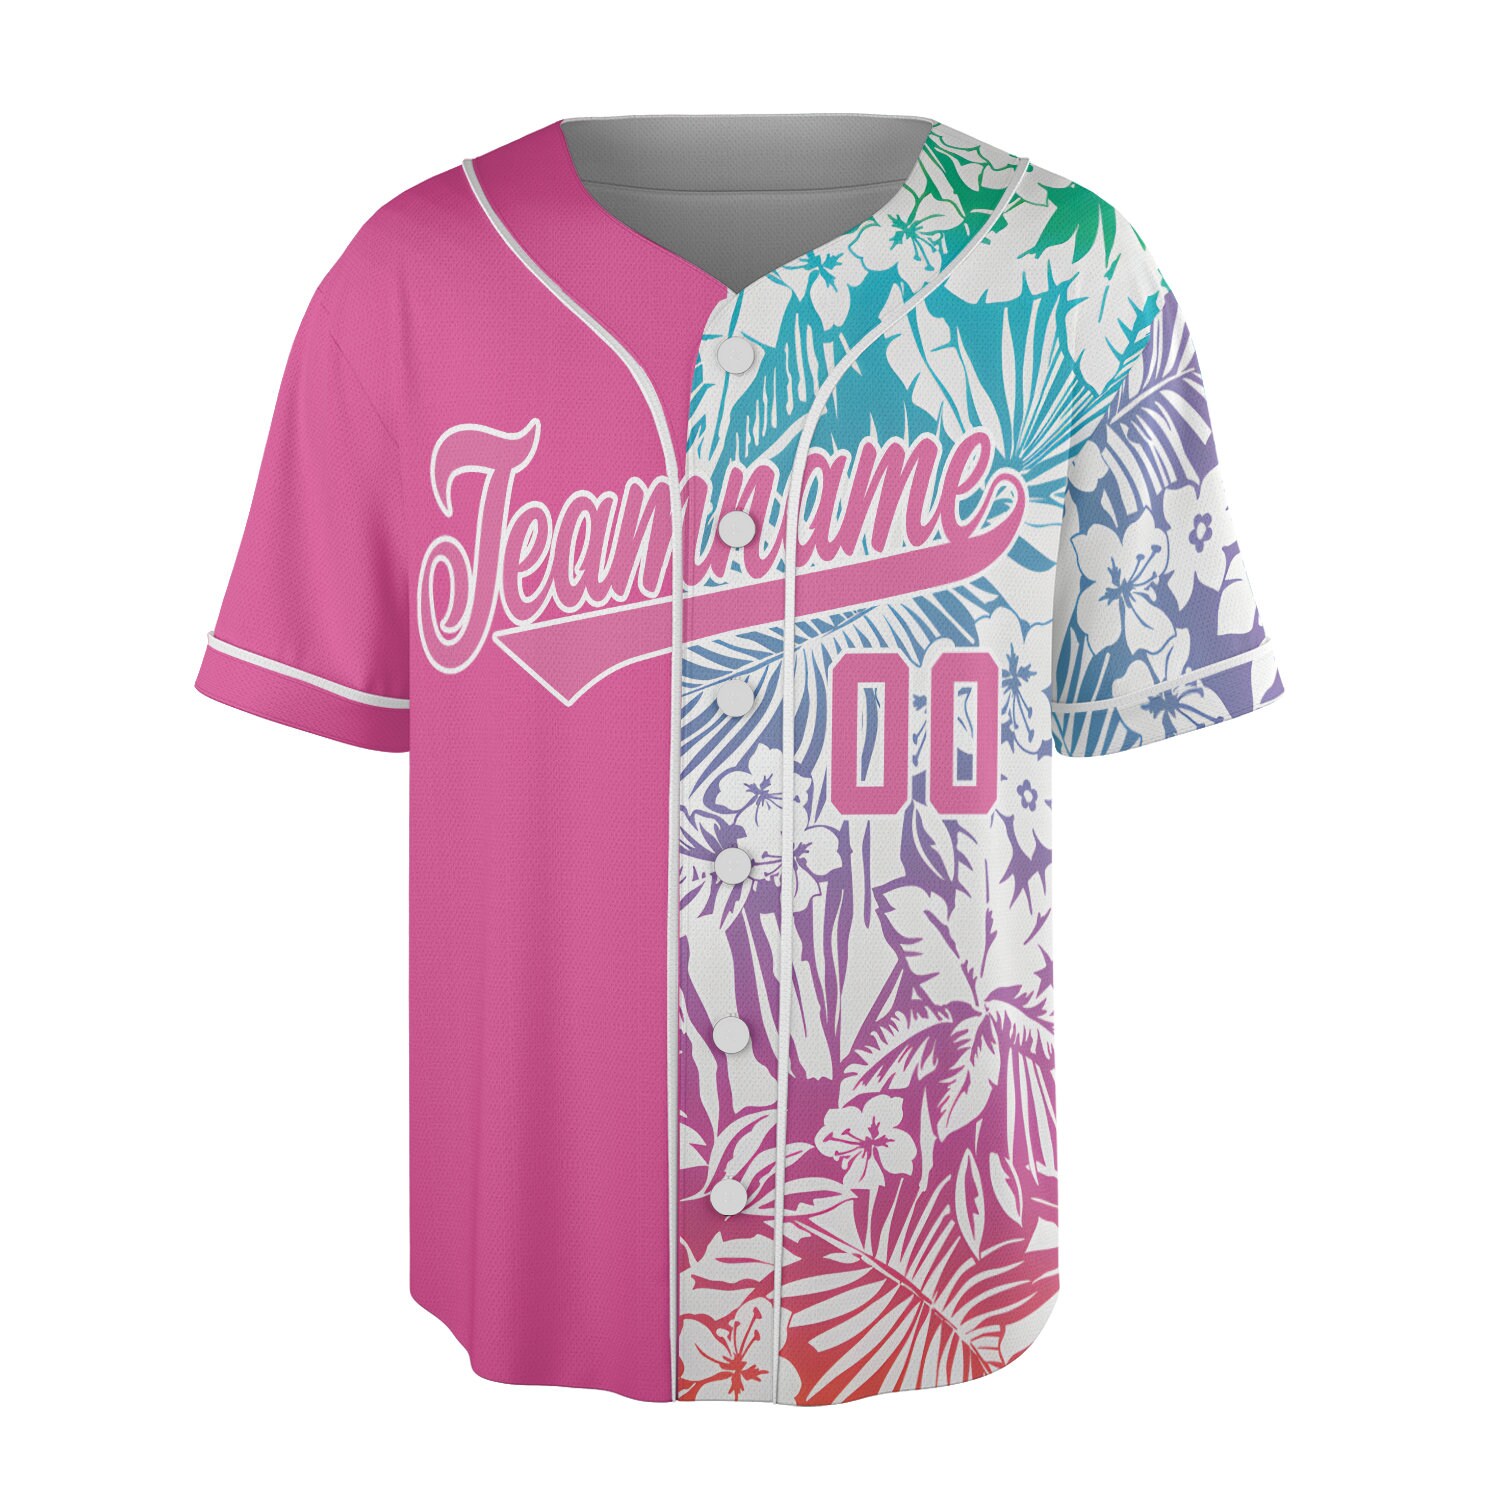 Custom Team Name Jersey For Baseball Fans, Personalized Baseball Team Name